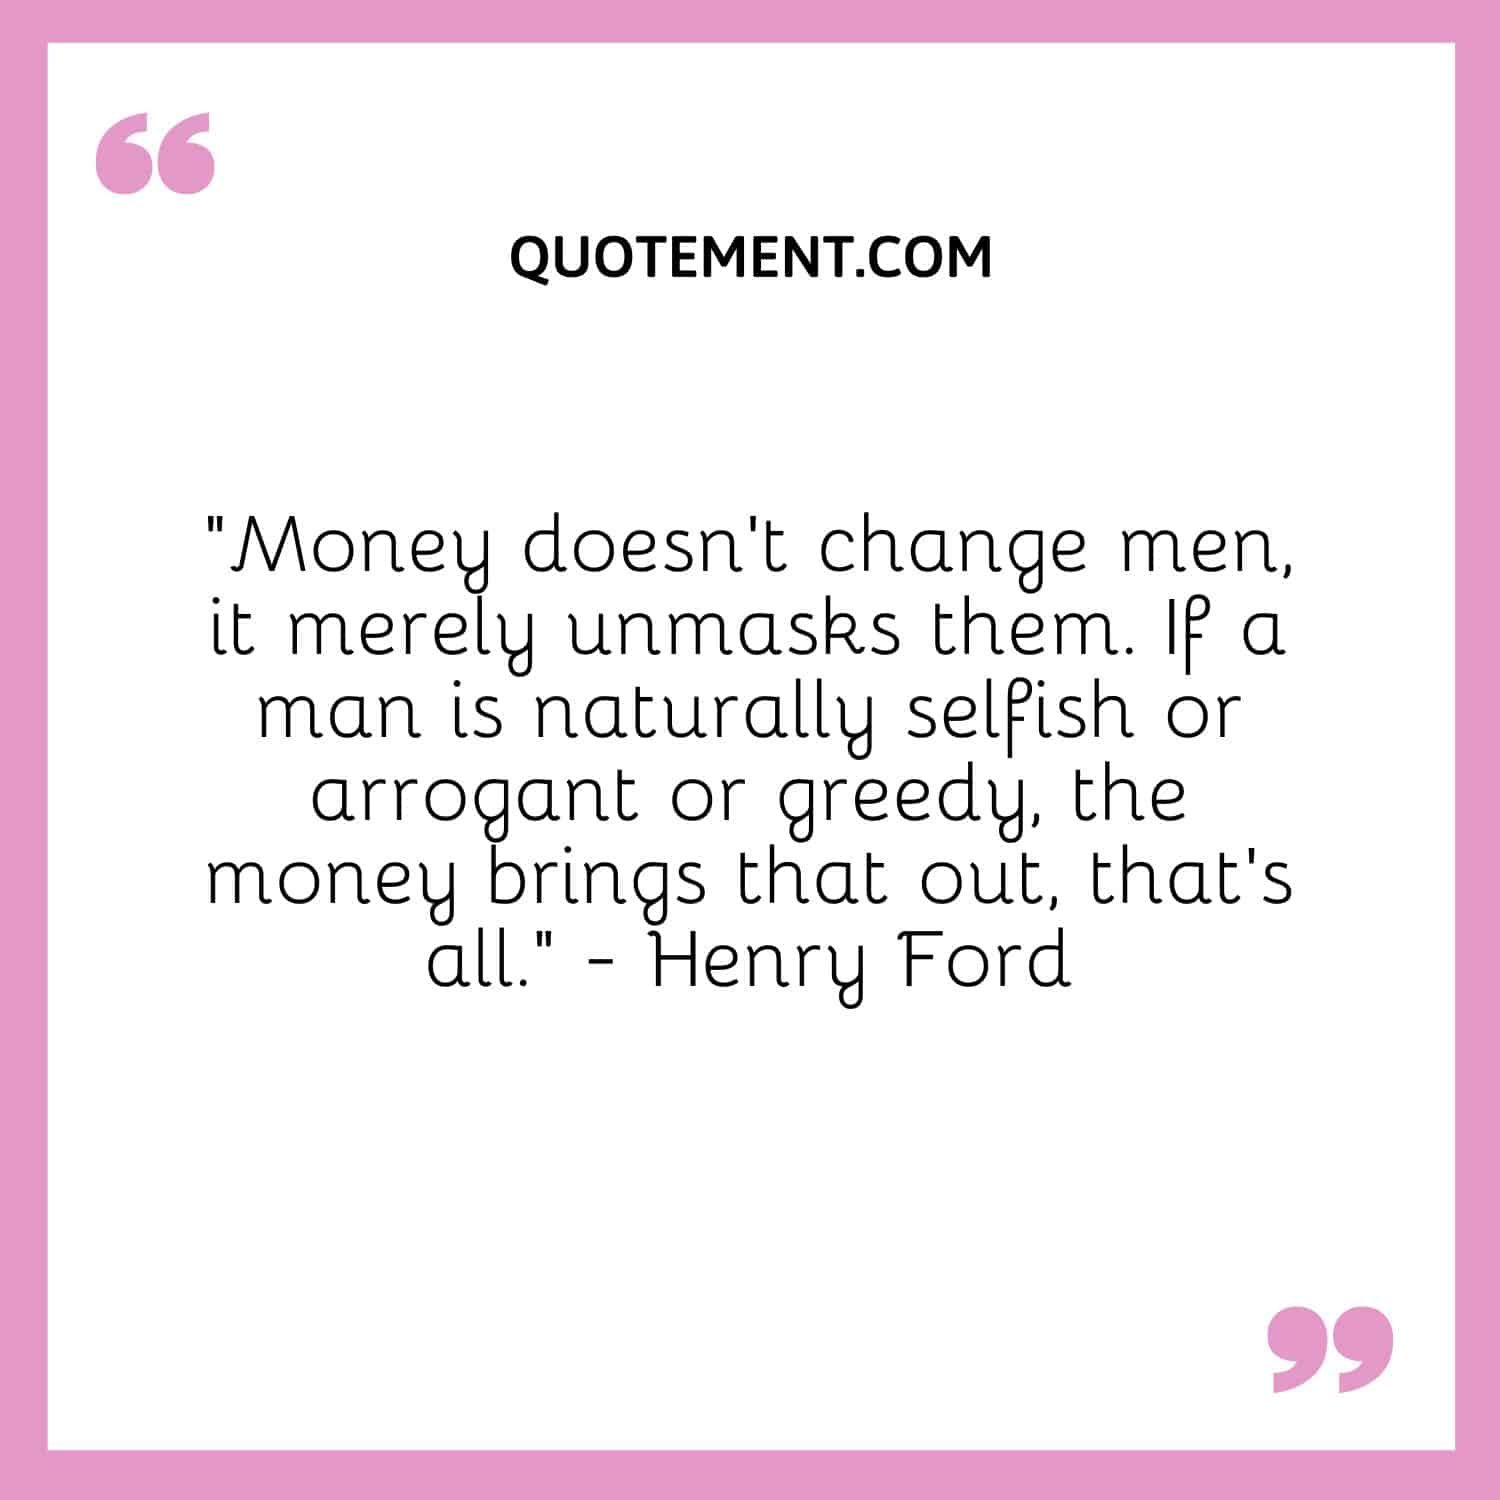 Money doesn't change men, it merely unmasks them